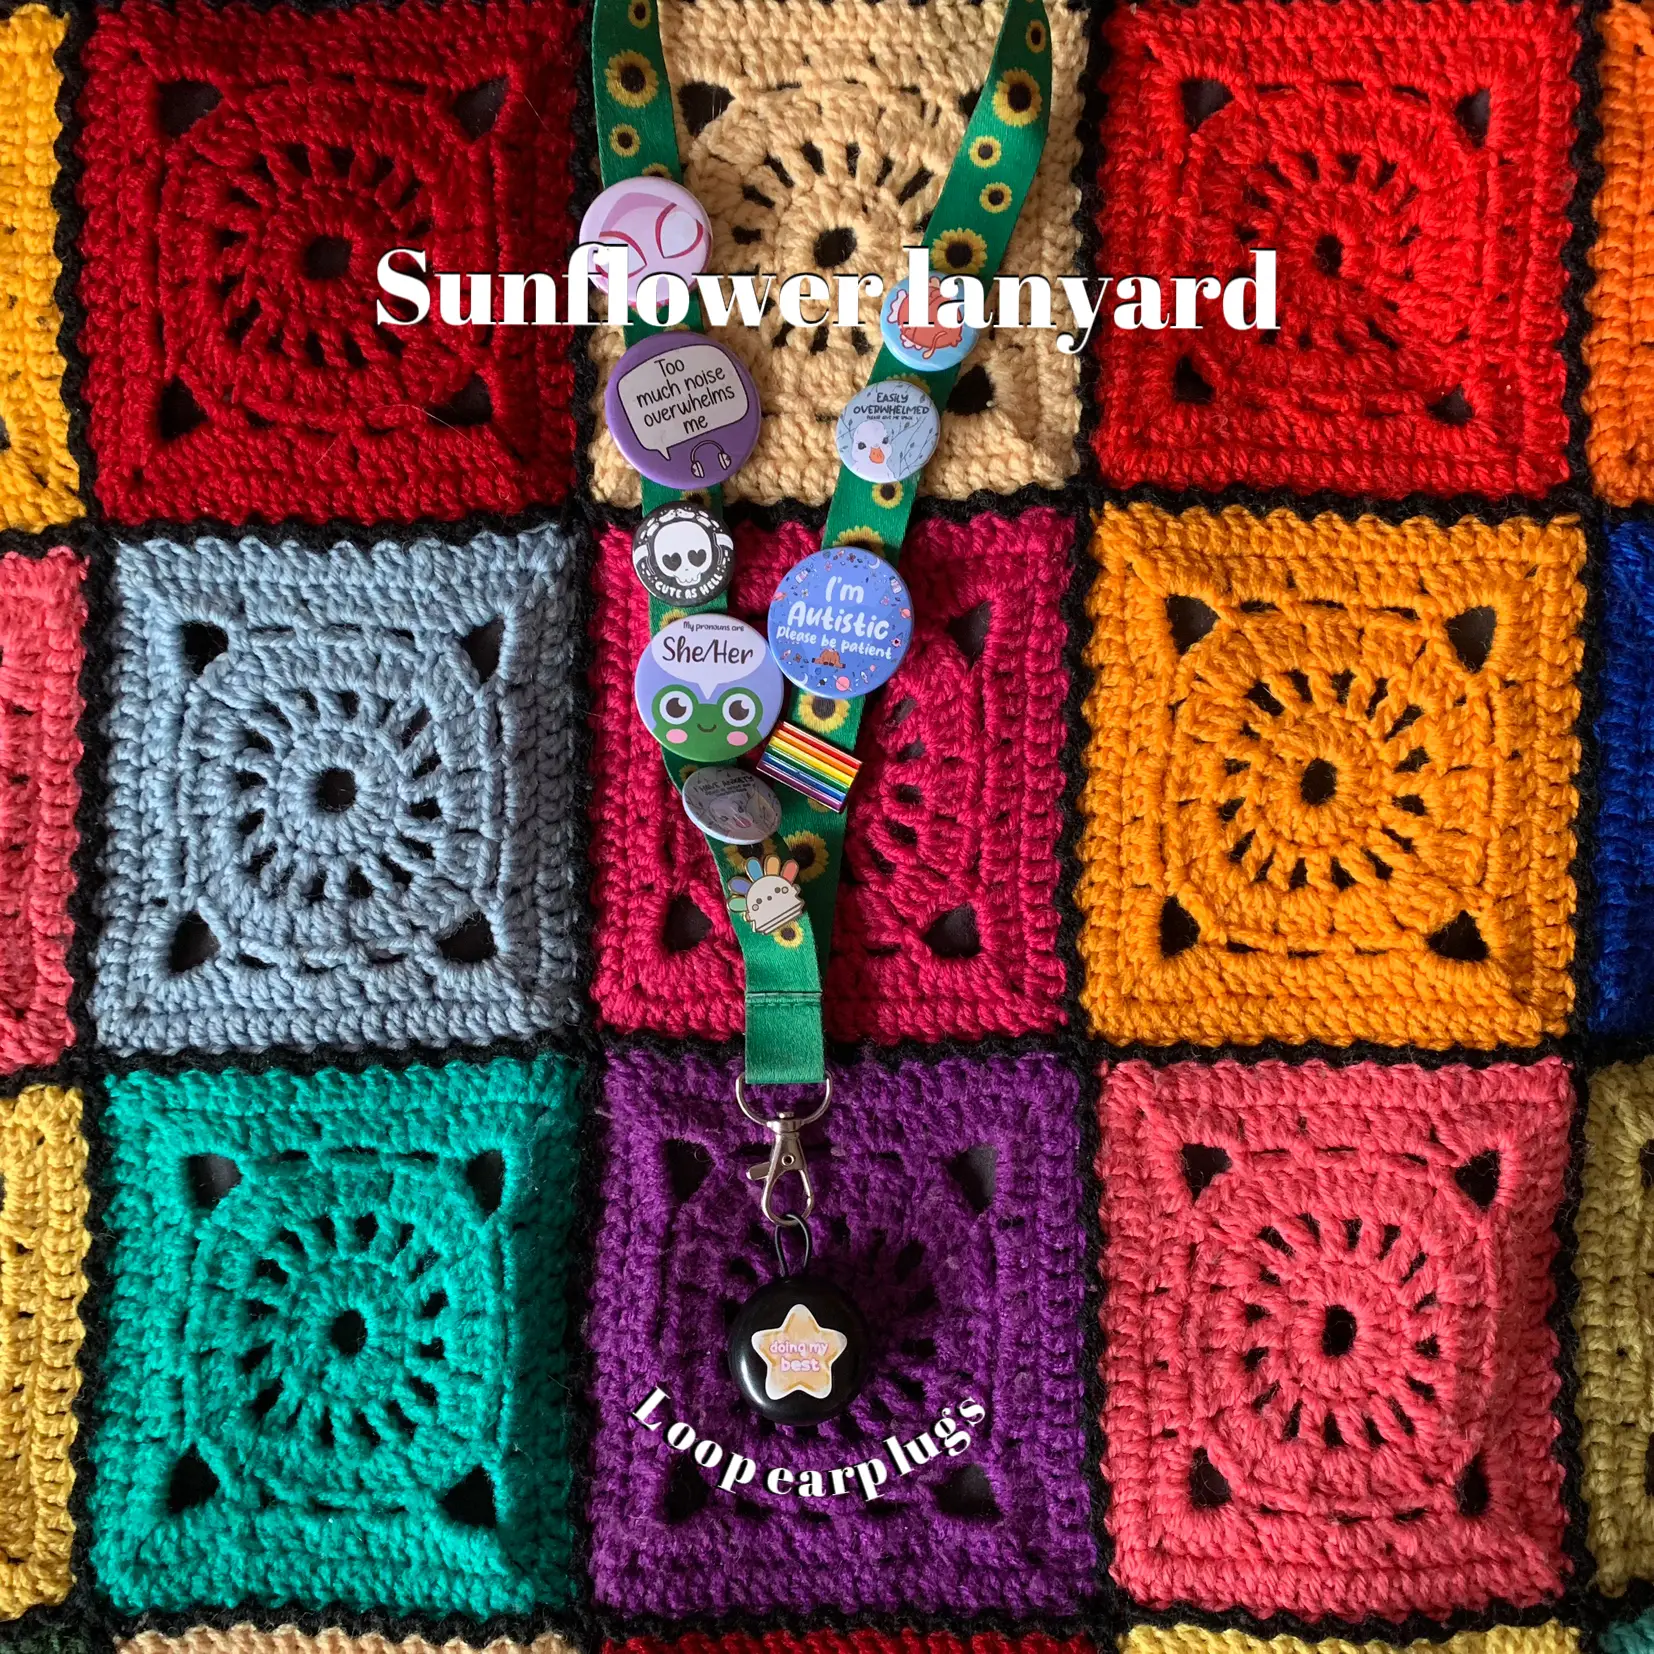 Crochet Granny Square Headband Pattern - the neon tea party